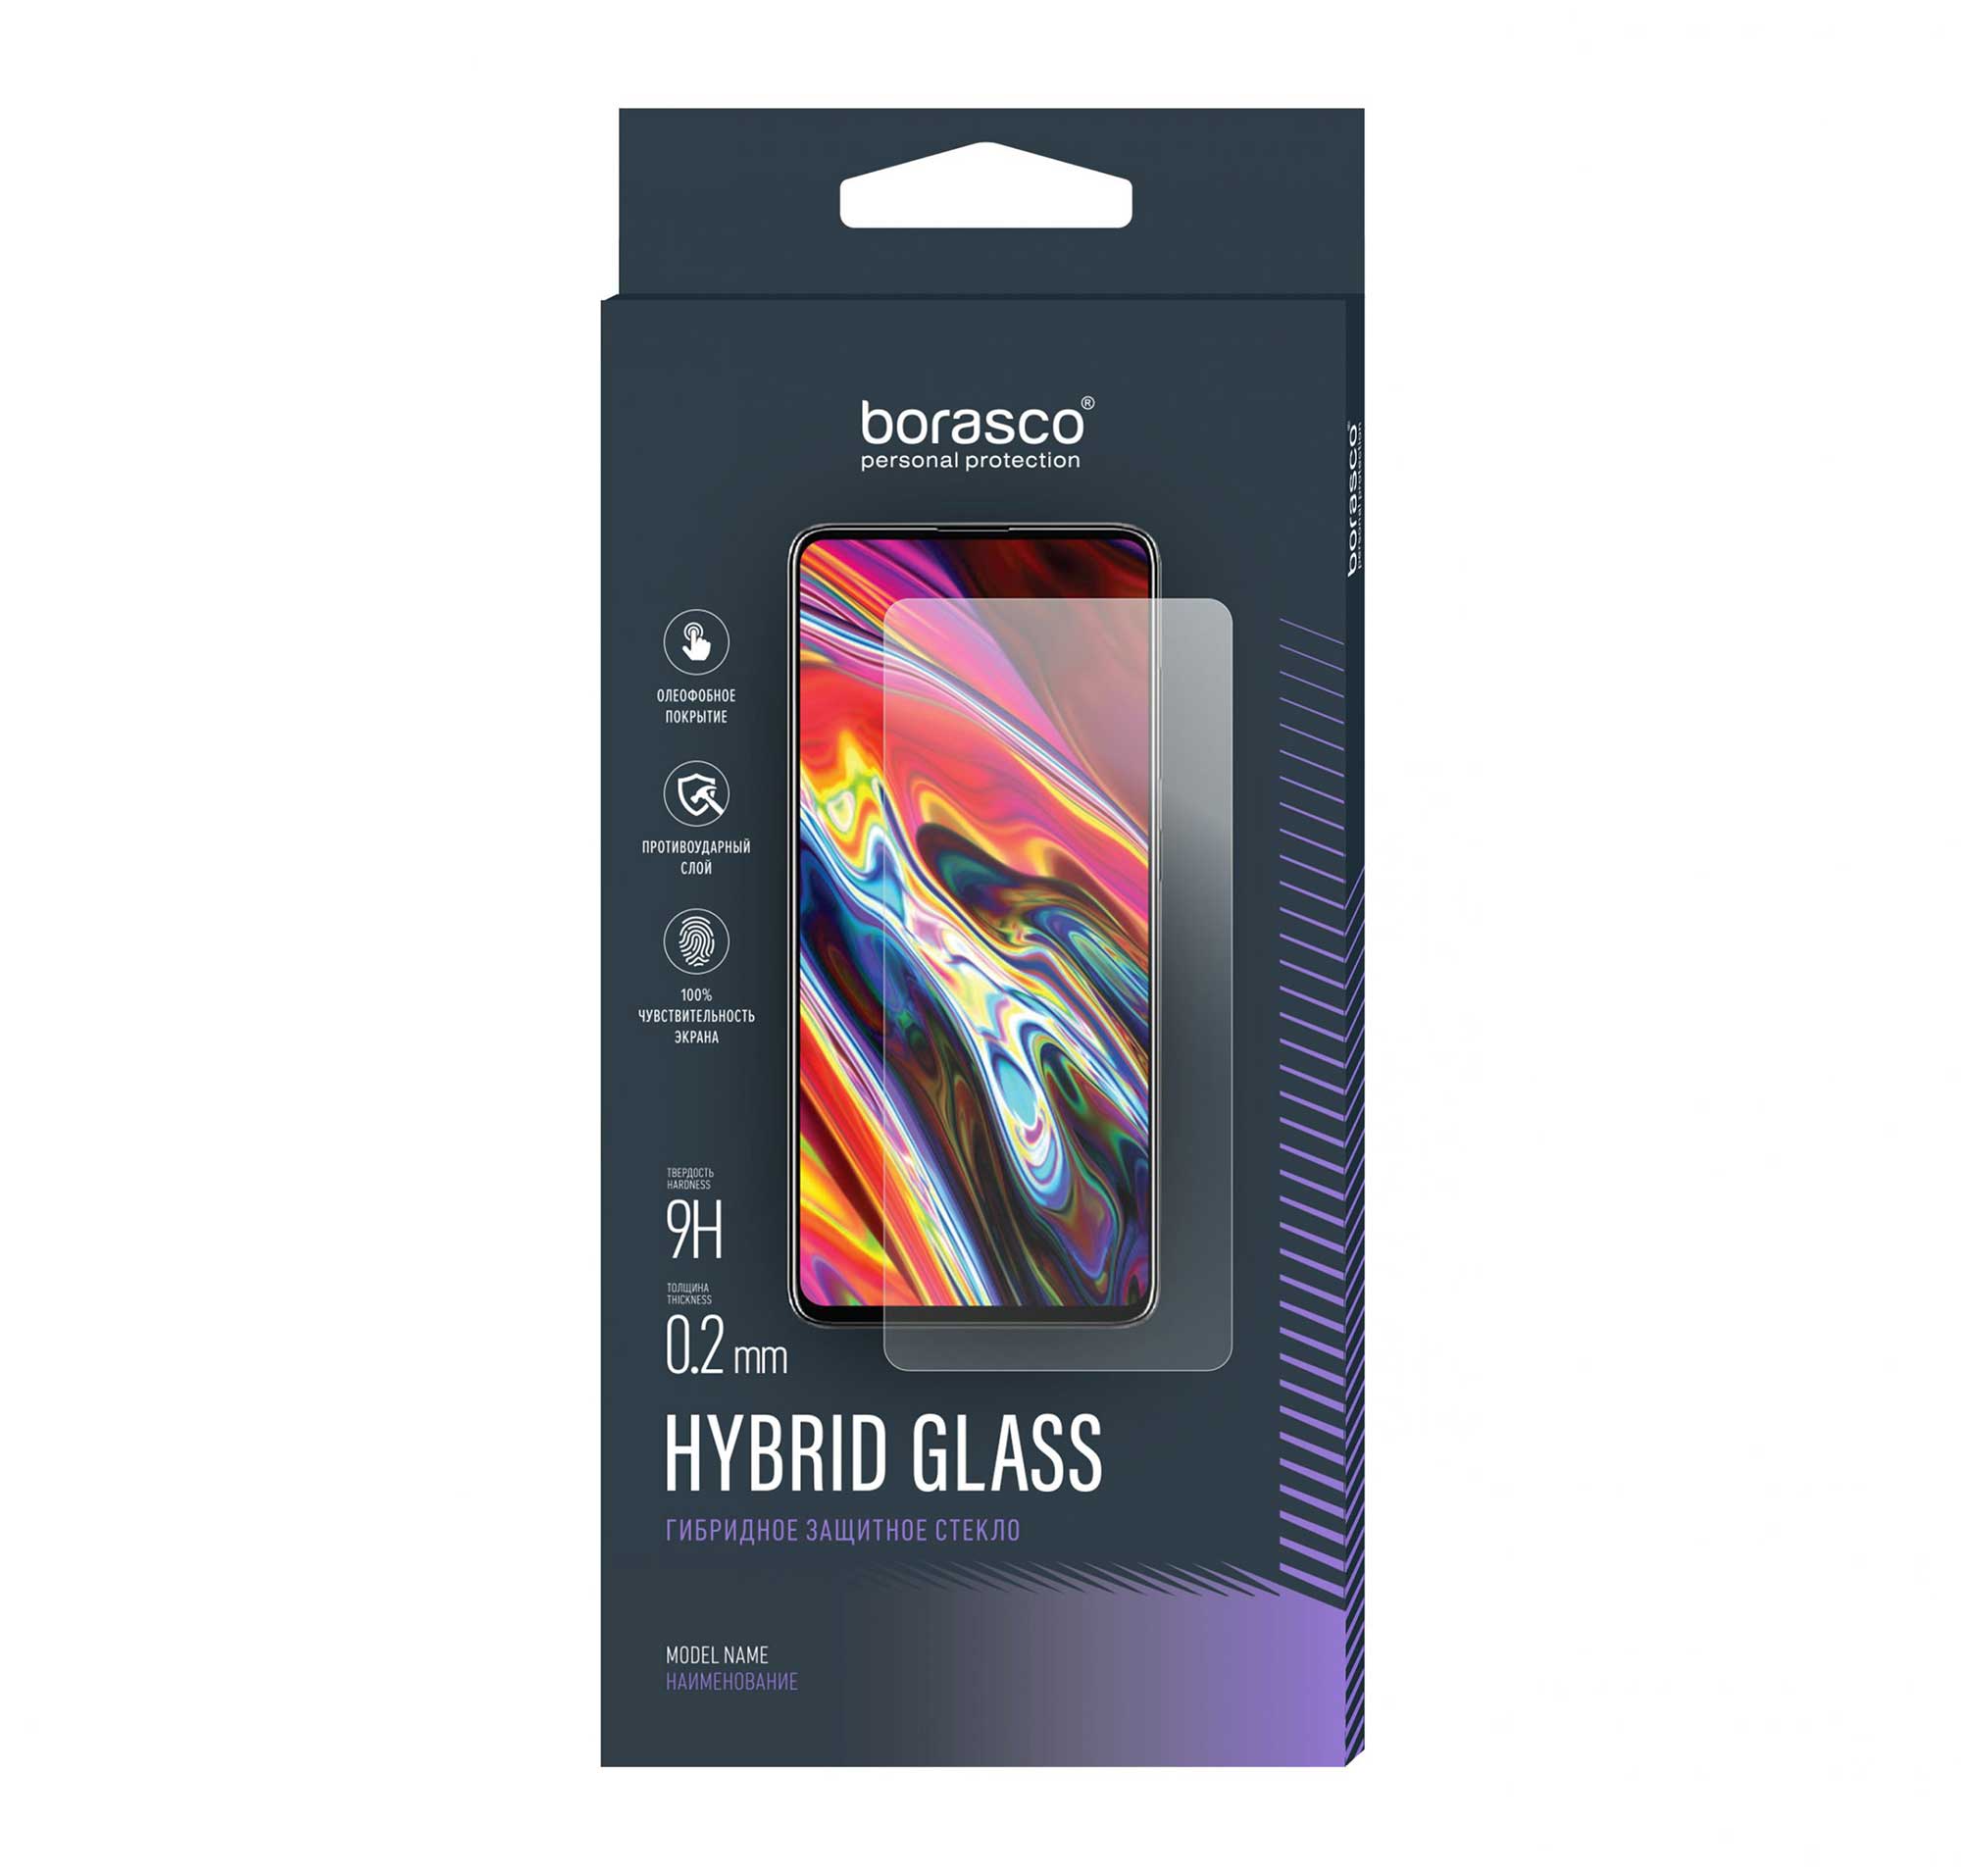 Защитное стекло Hybrid Glass для Itel Vision 1 Pro защитное стекло borasco hybrid glass для itel vision 3 plus